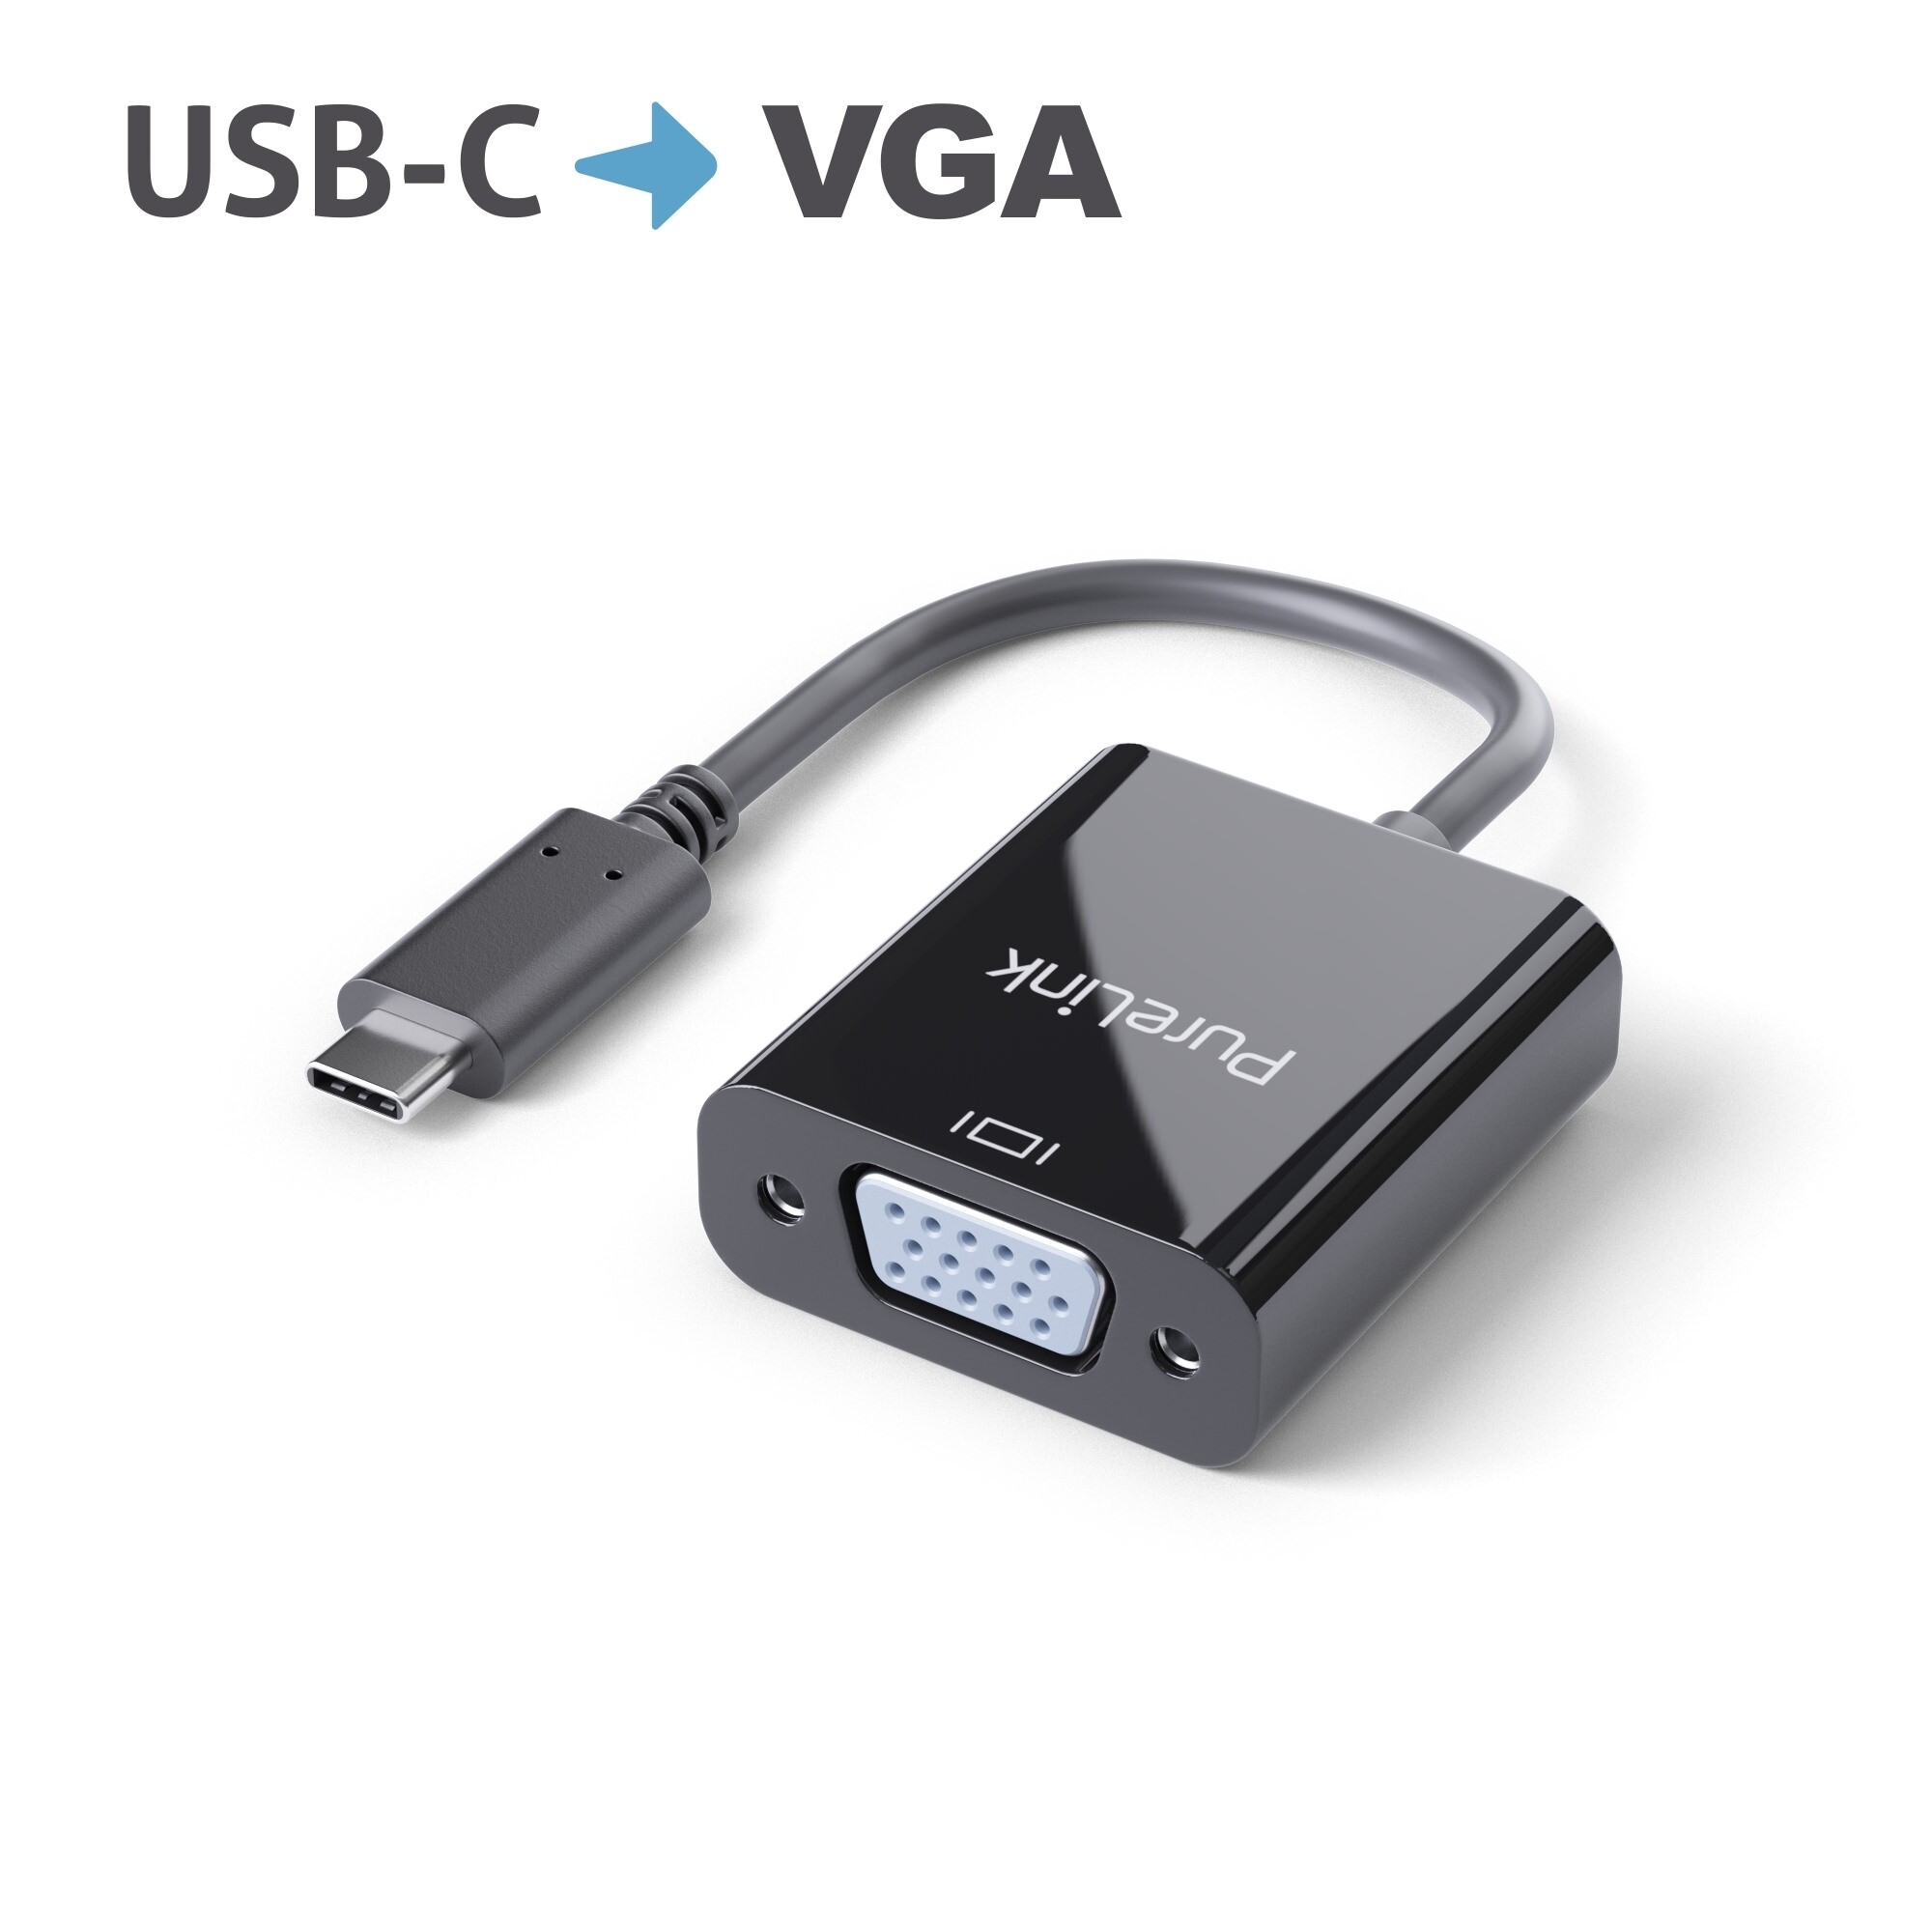 PURELINK USB-C auf VGA Adapter 1200p 0.10m schwarz - Adapter - Digital/Daten (IS221)